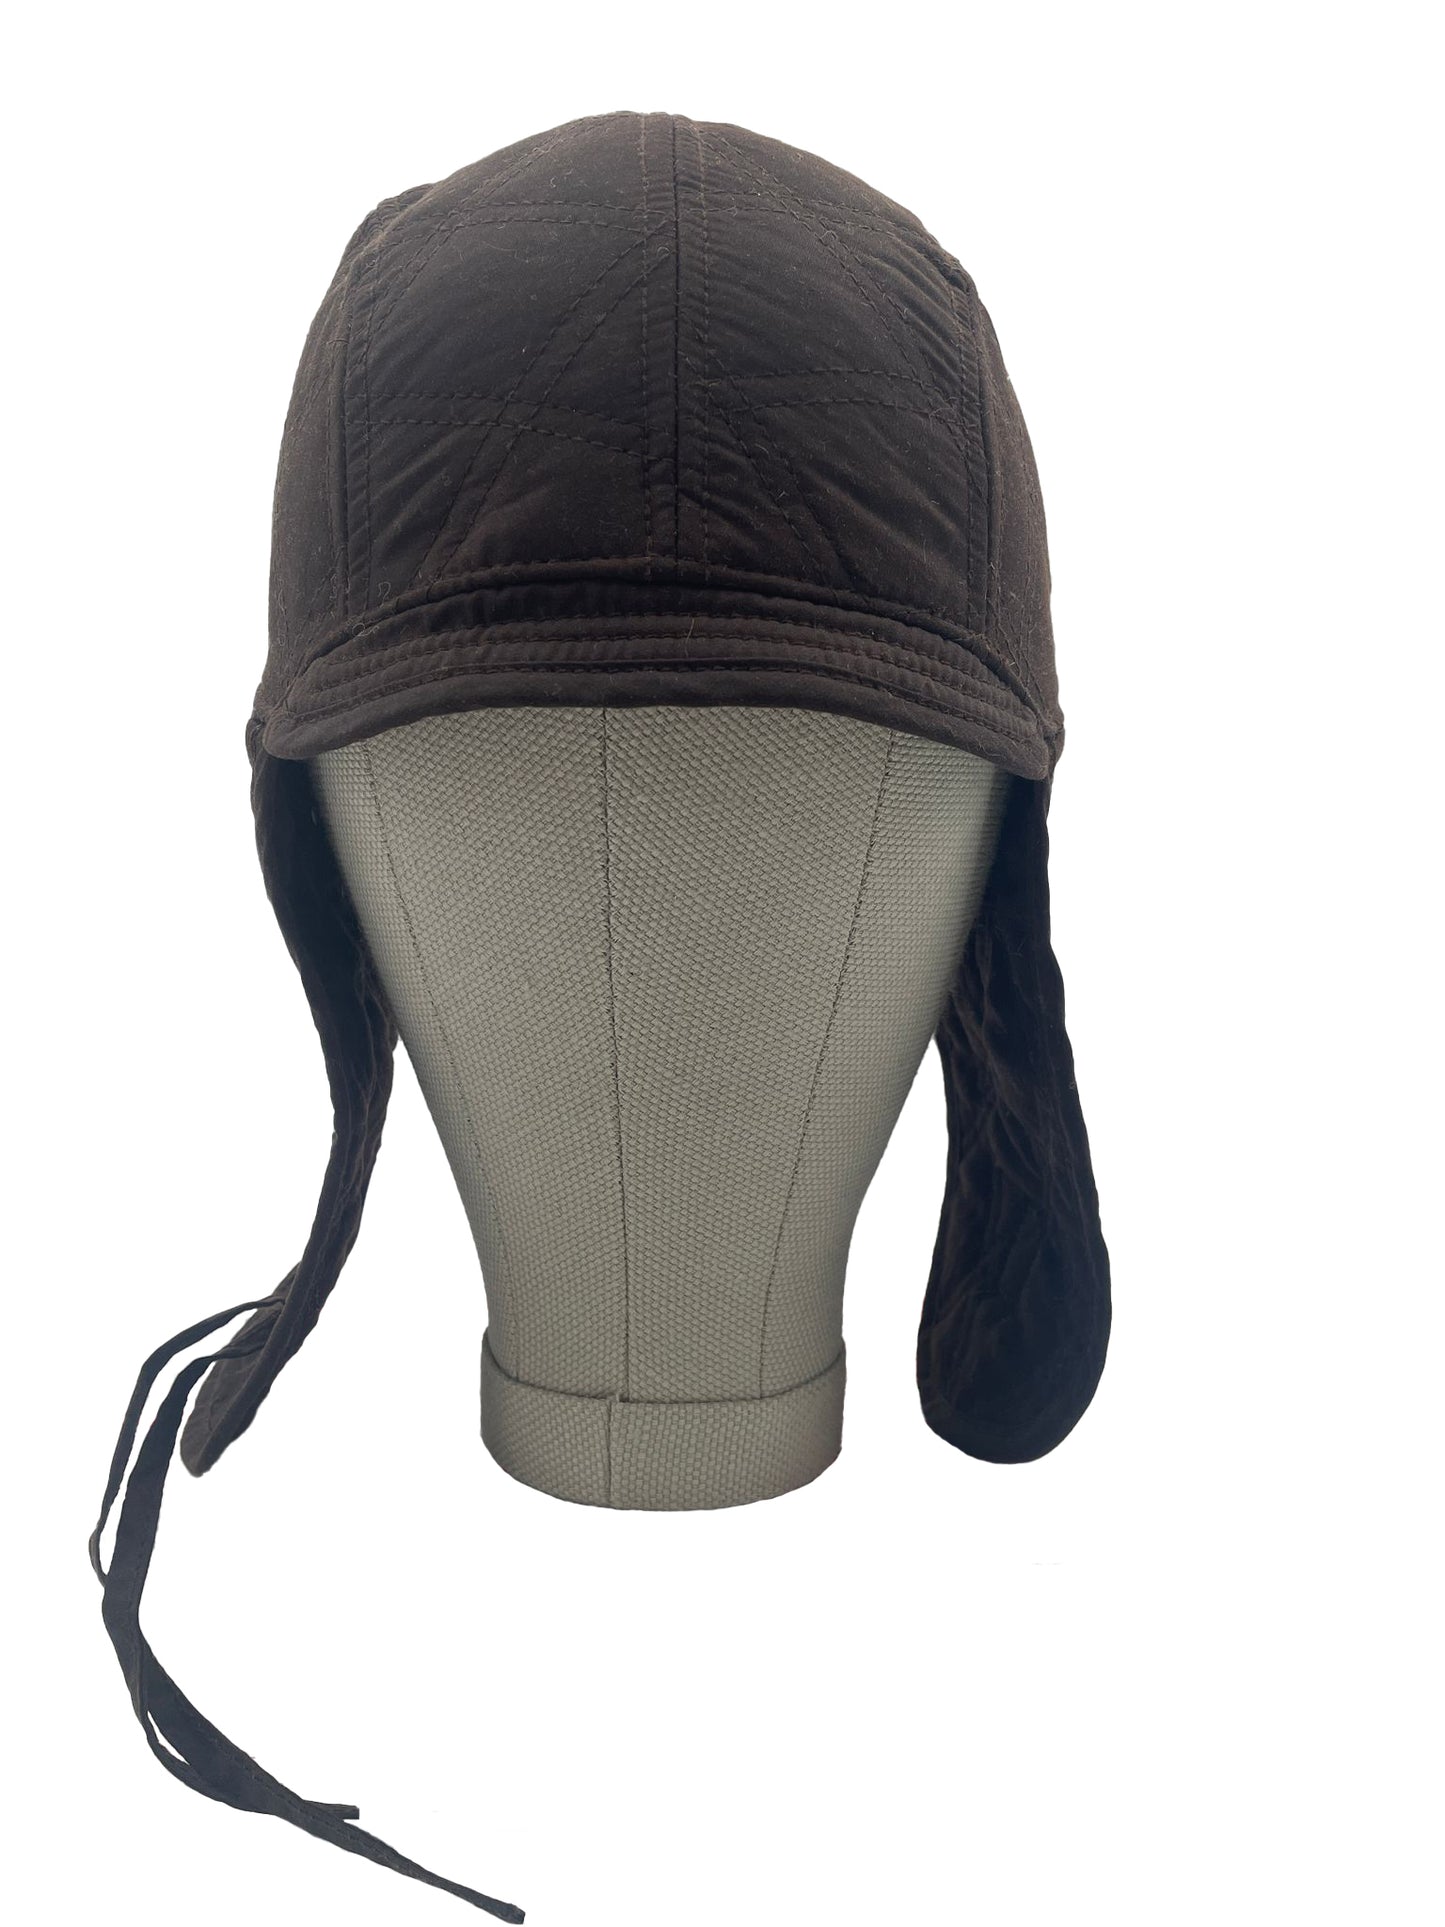 Redfern Aviator hat in black, brown or navy